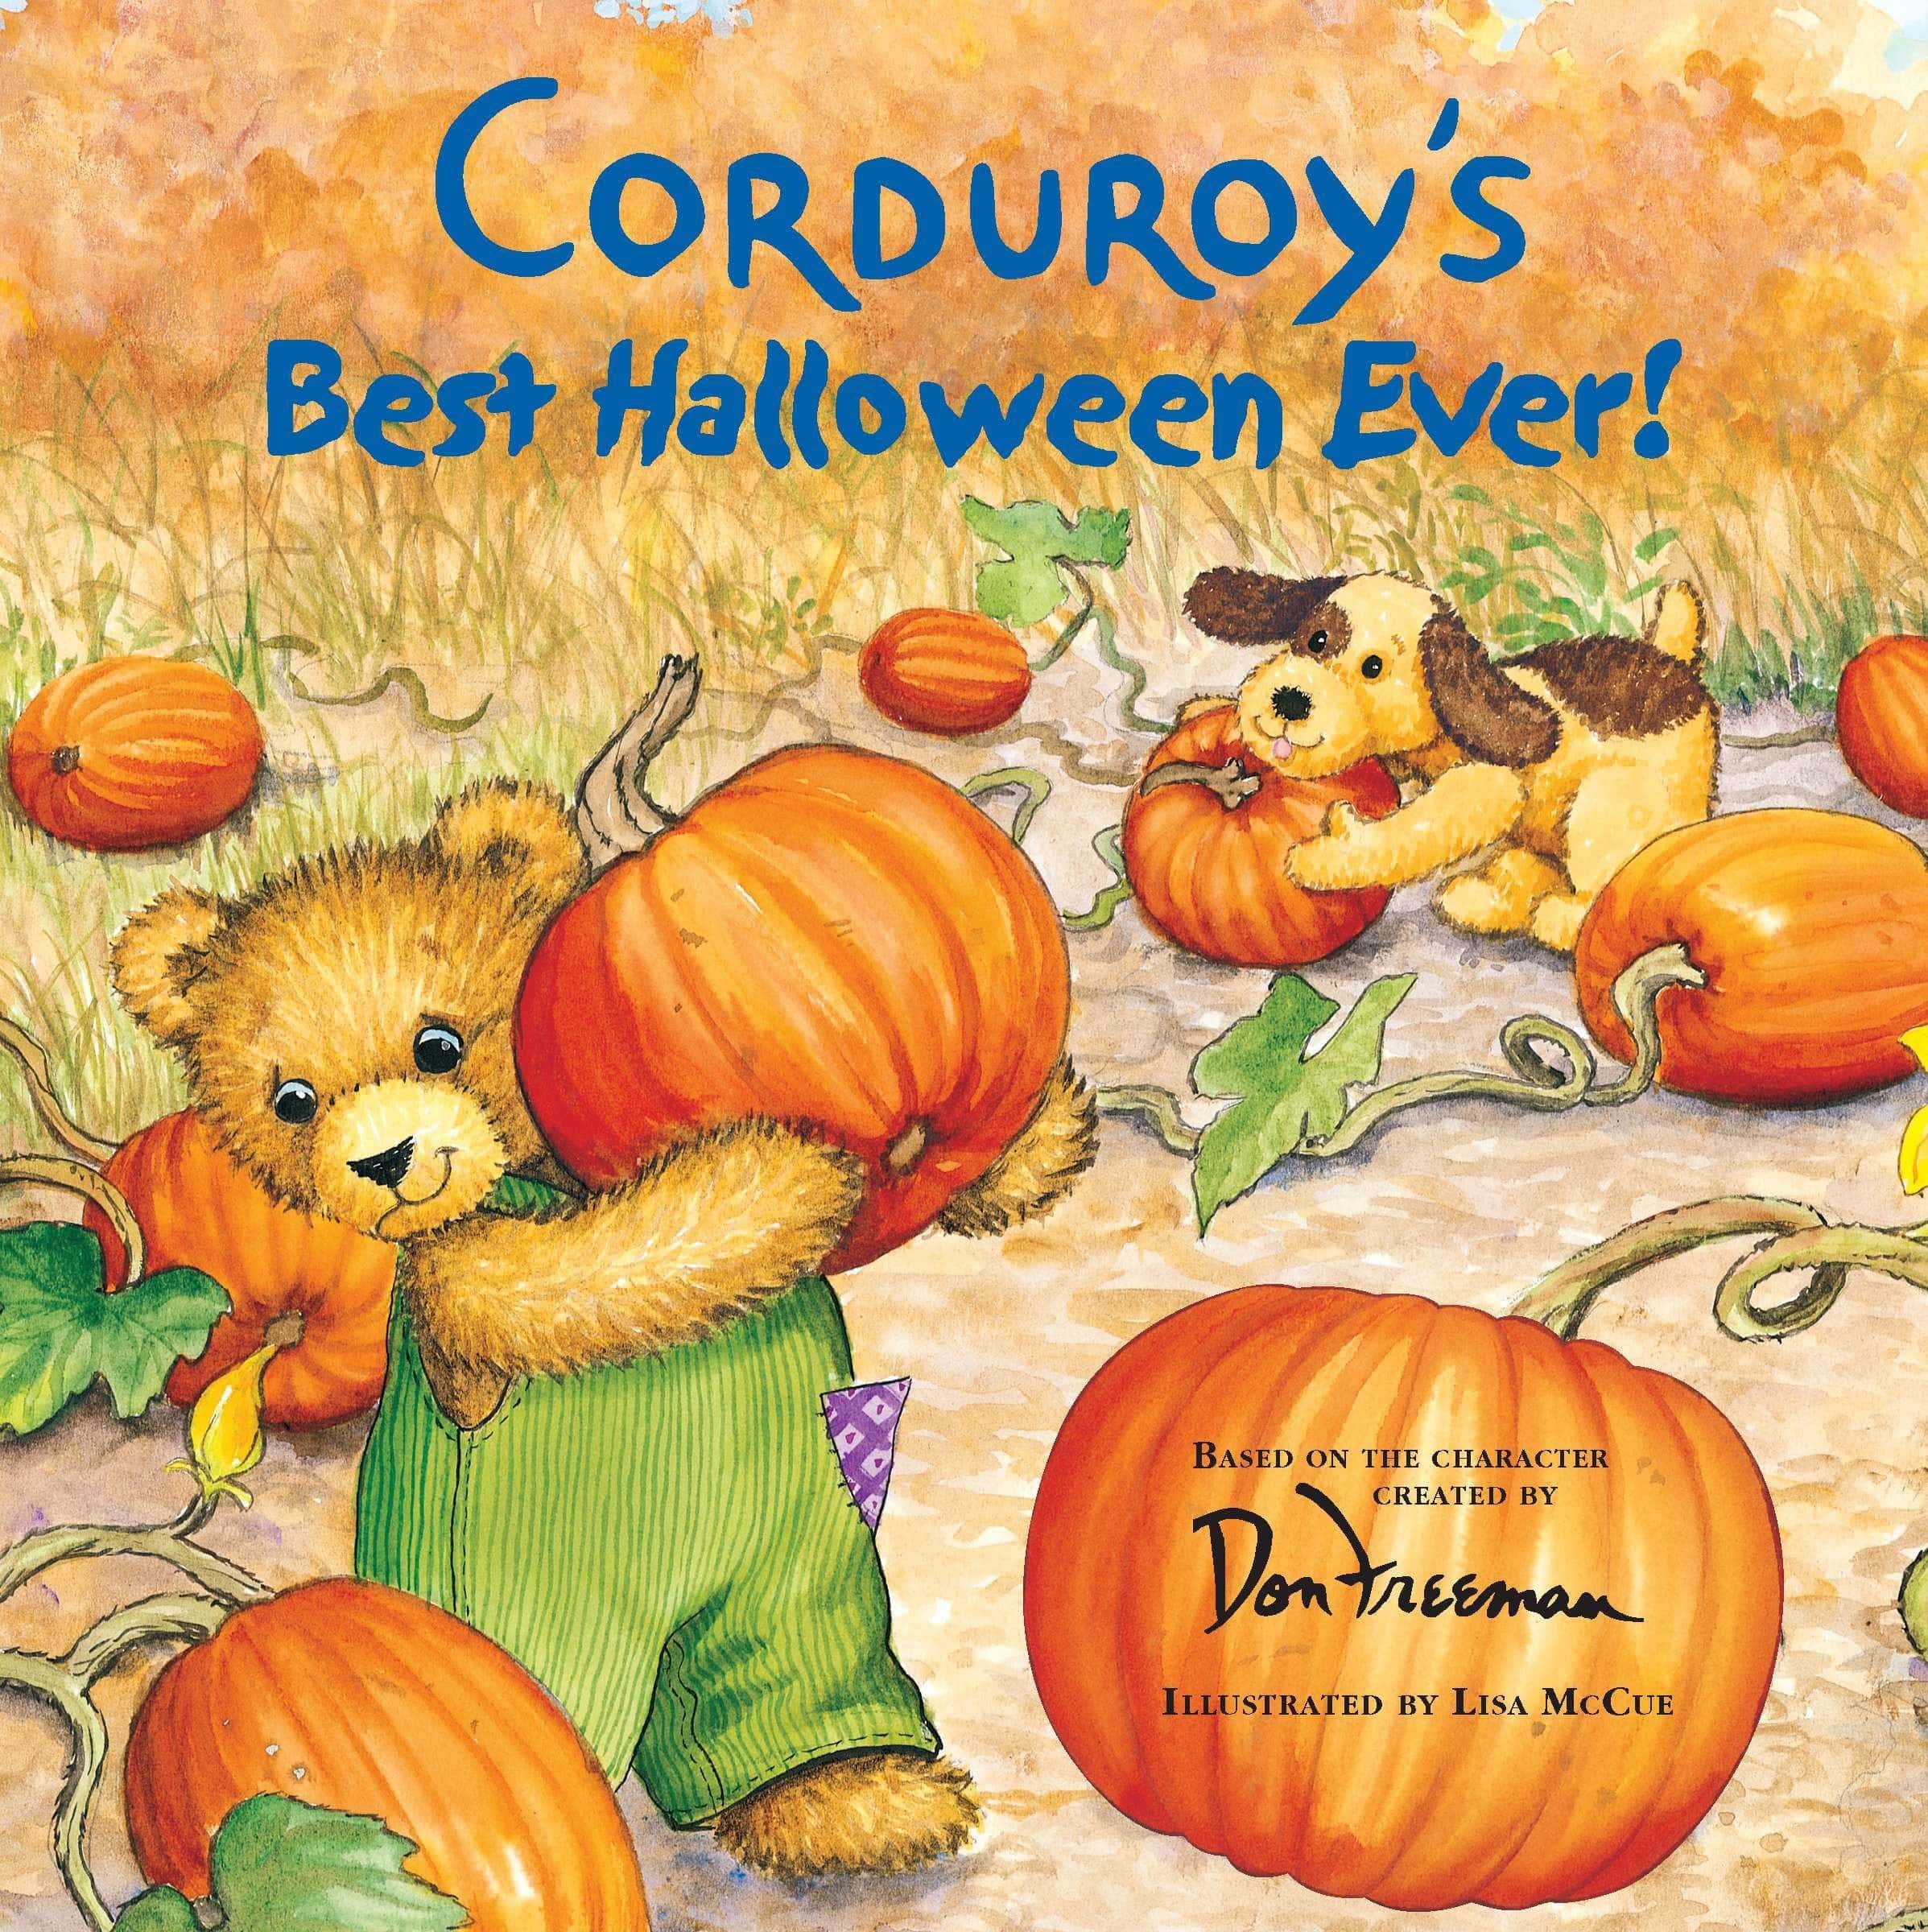 "Corduroy's Best Halloween Ever!" by Don Freeman